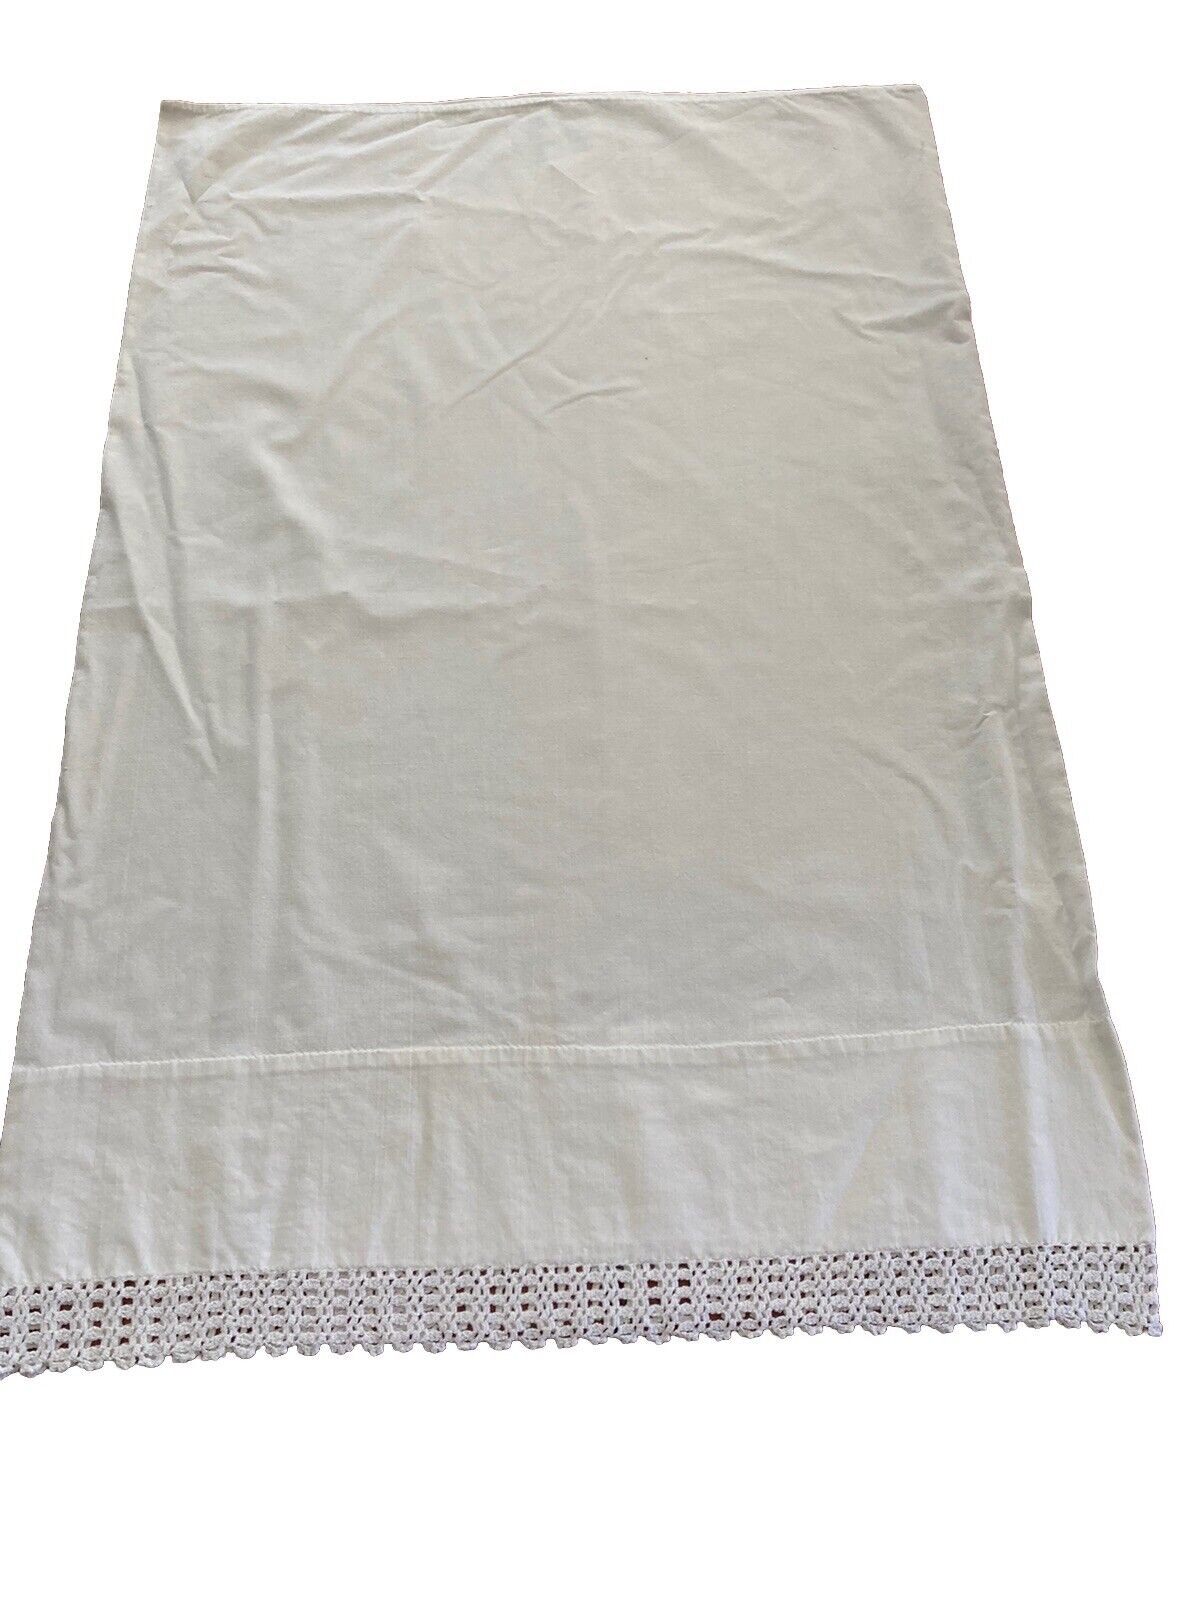 1 VINTAGE Heavy Cotton Pristine White Pillowcase With Hand Crochet Lace